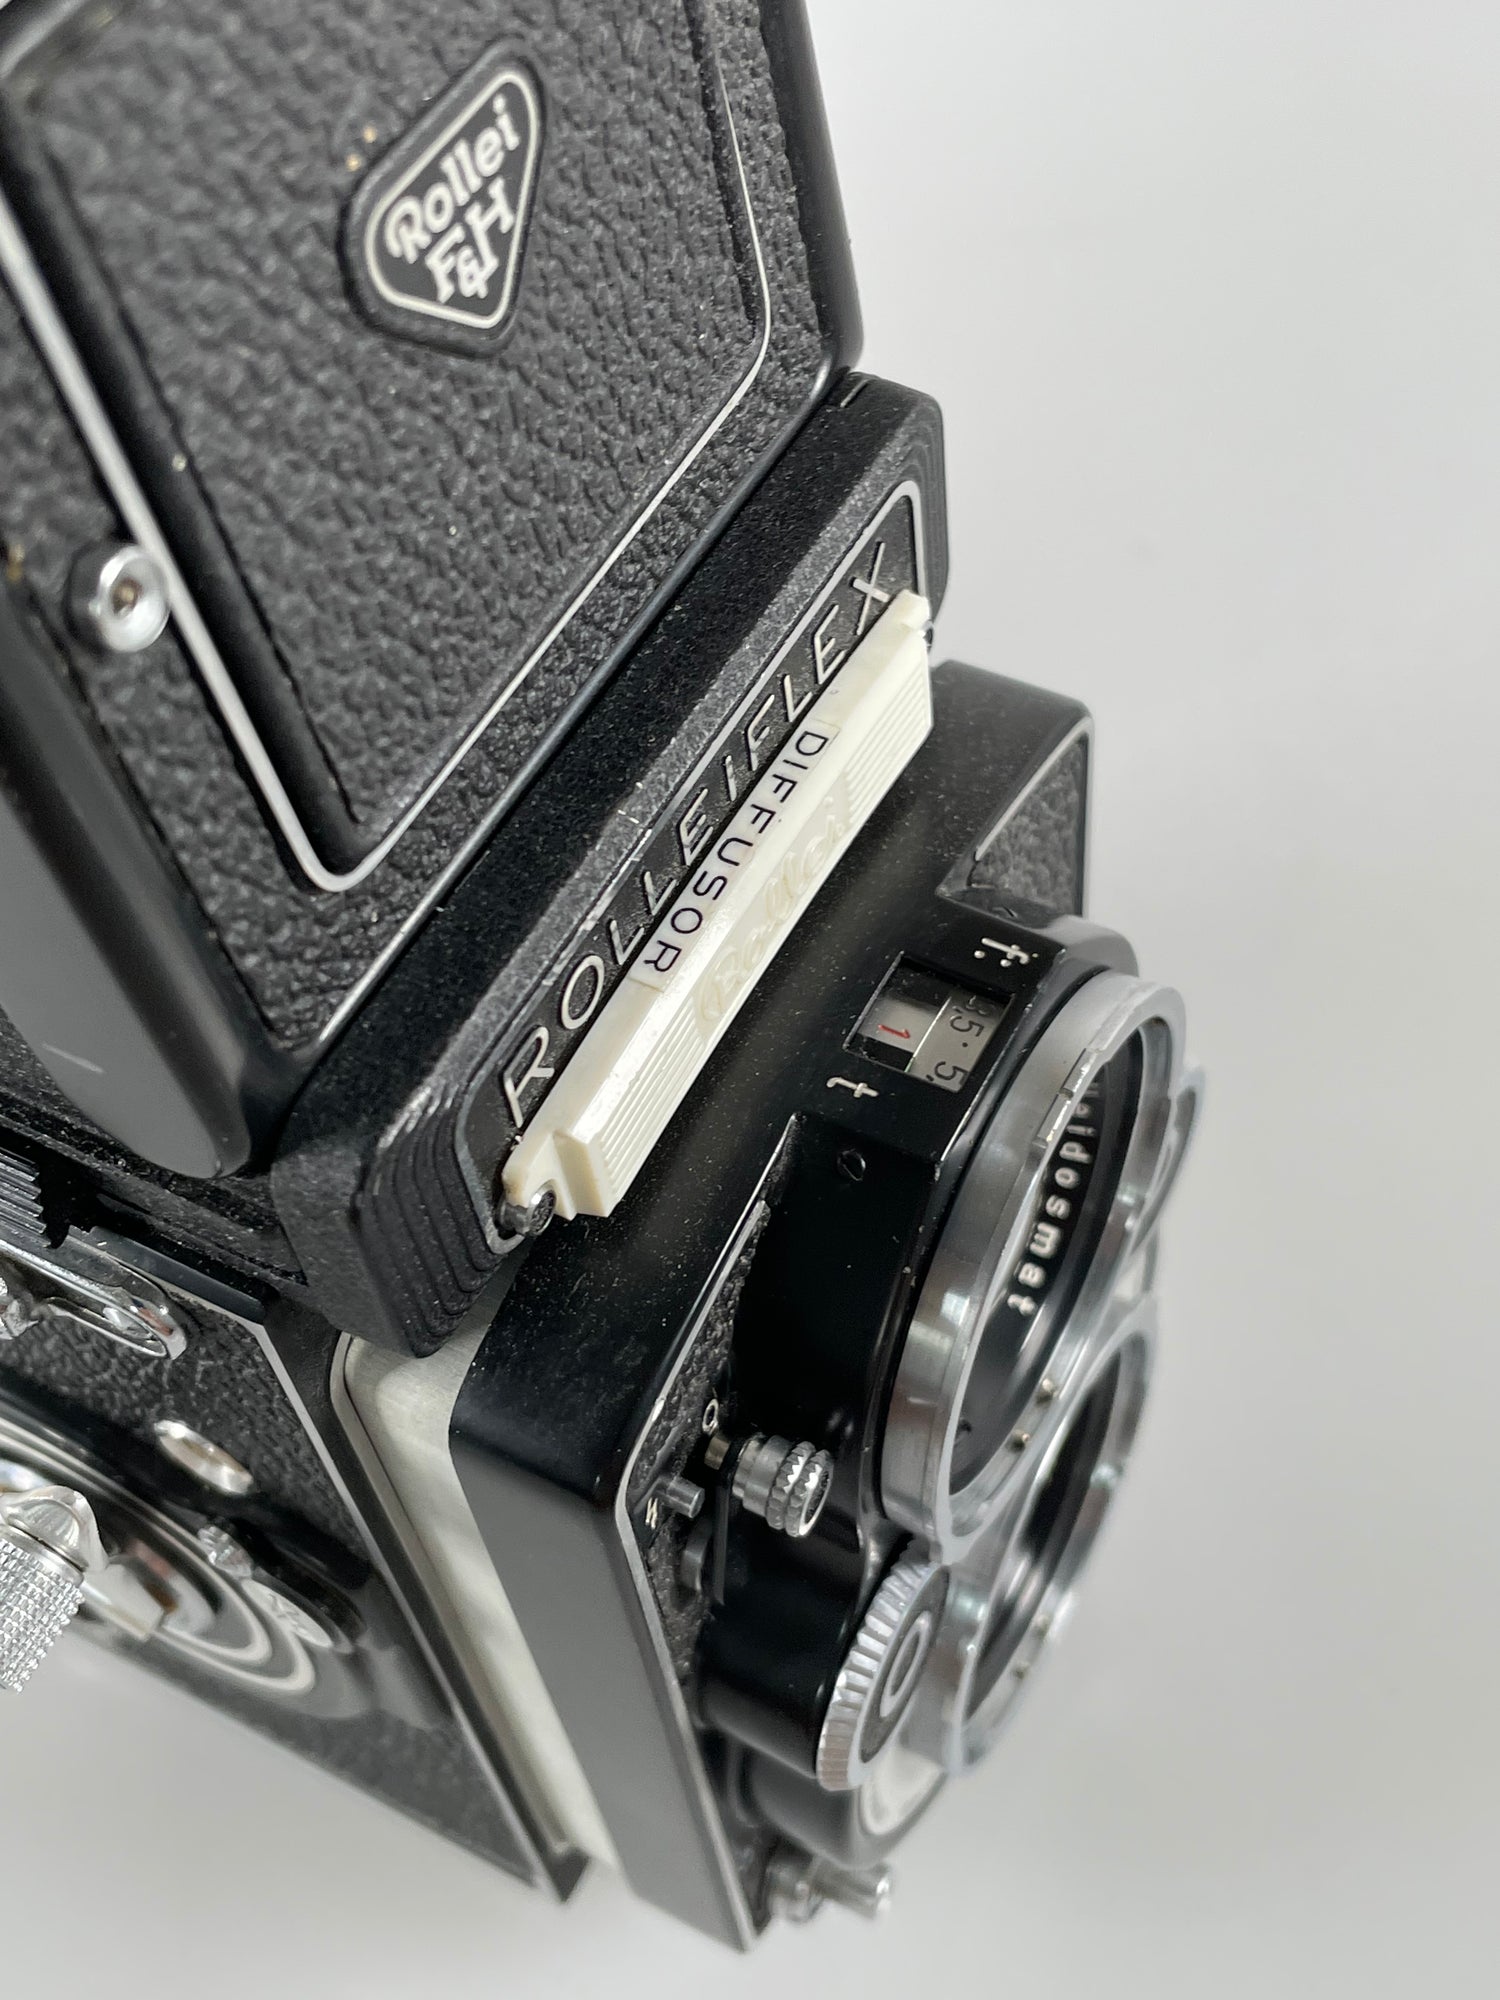 Rollei Rolleiflex 3.5F White Face Planar 75mm F3.5 6x6 film camera